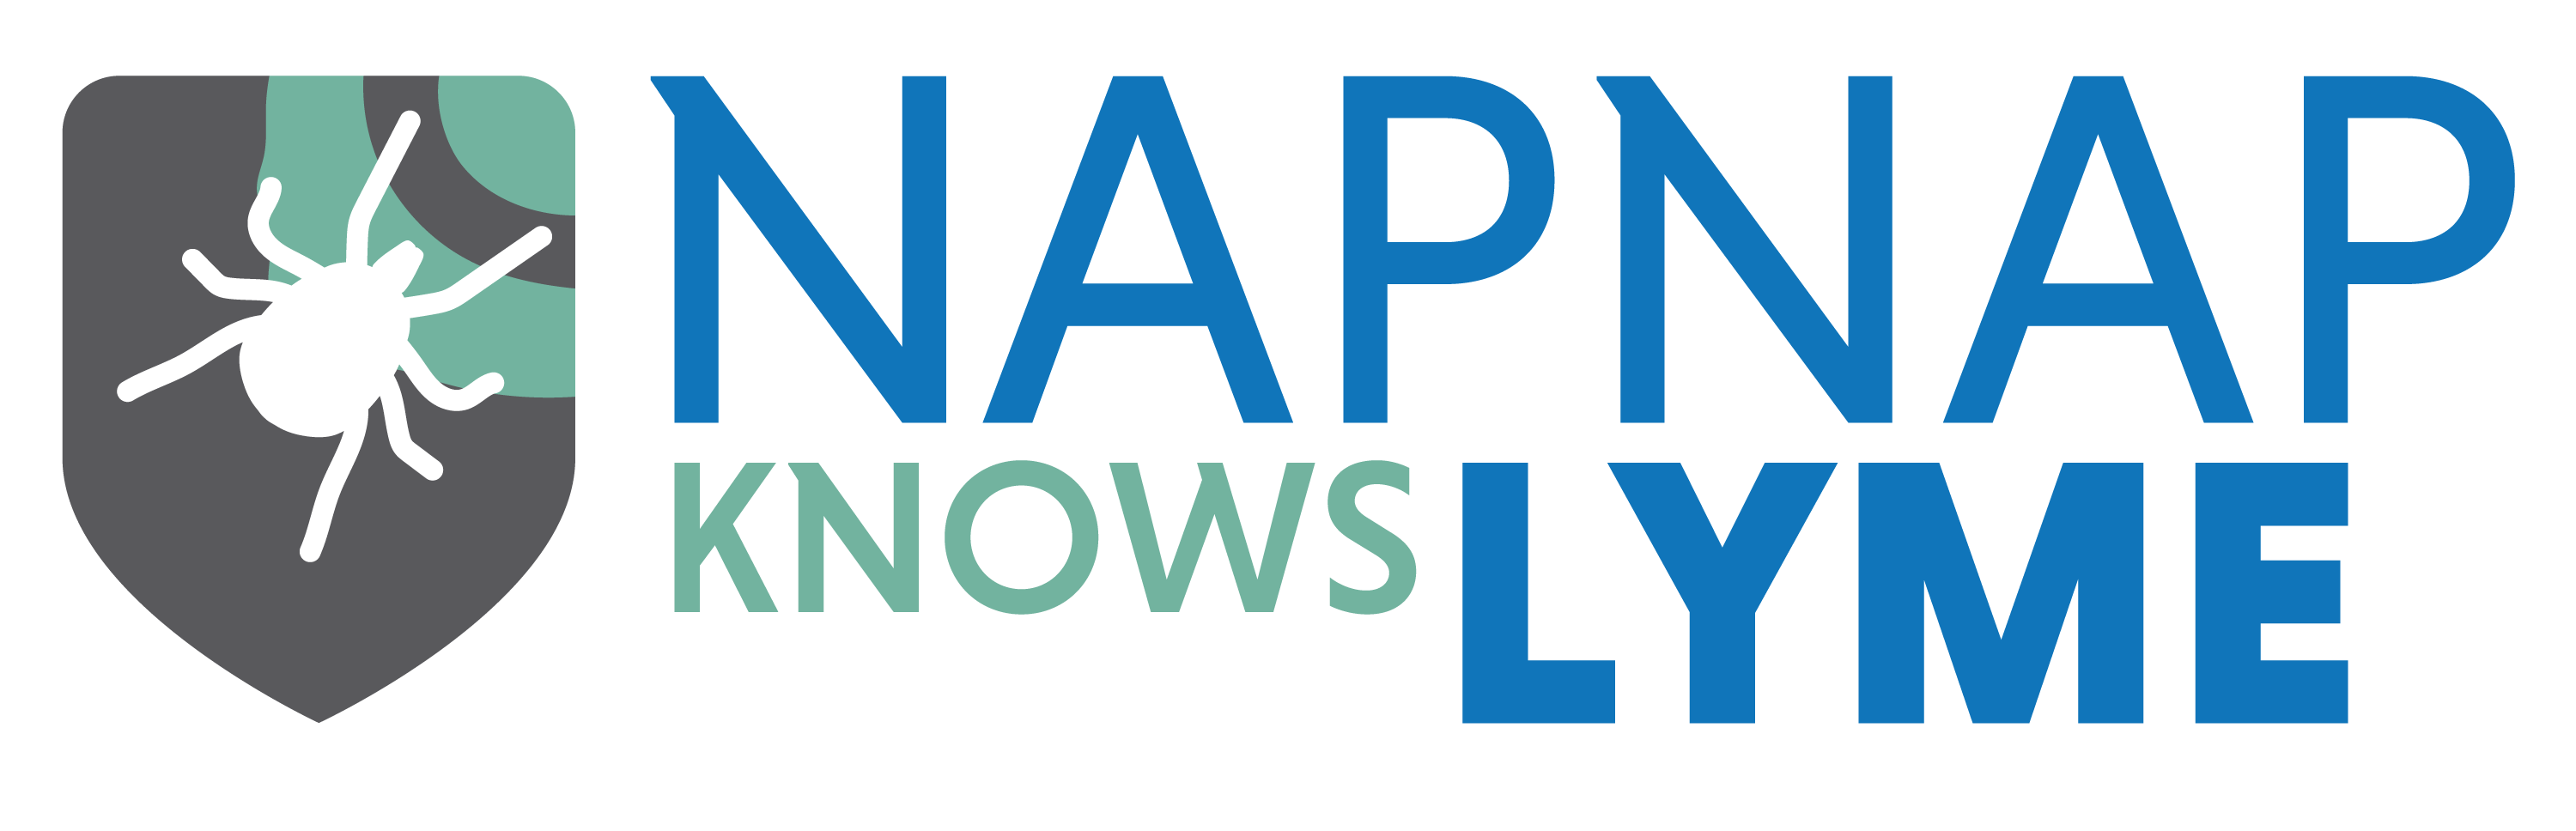 NAPNAP Knows Lyme